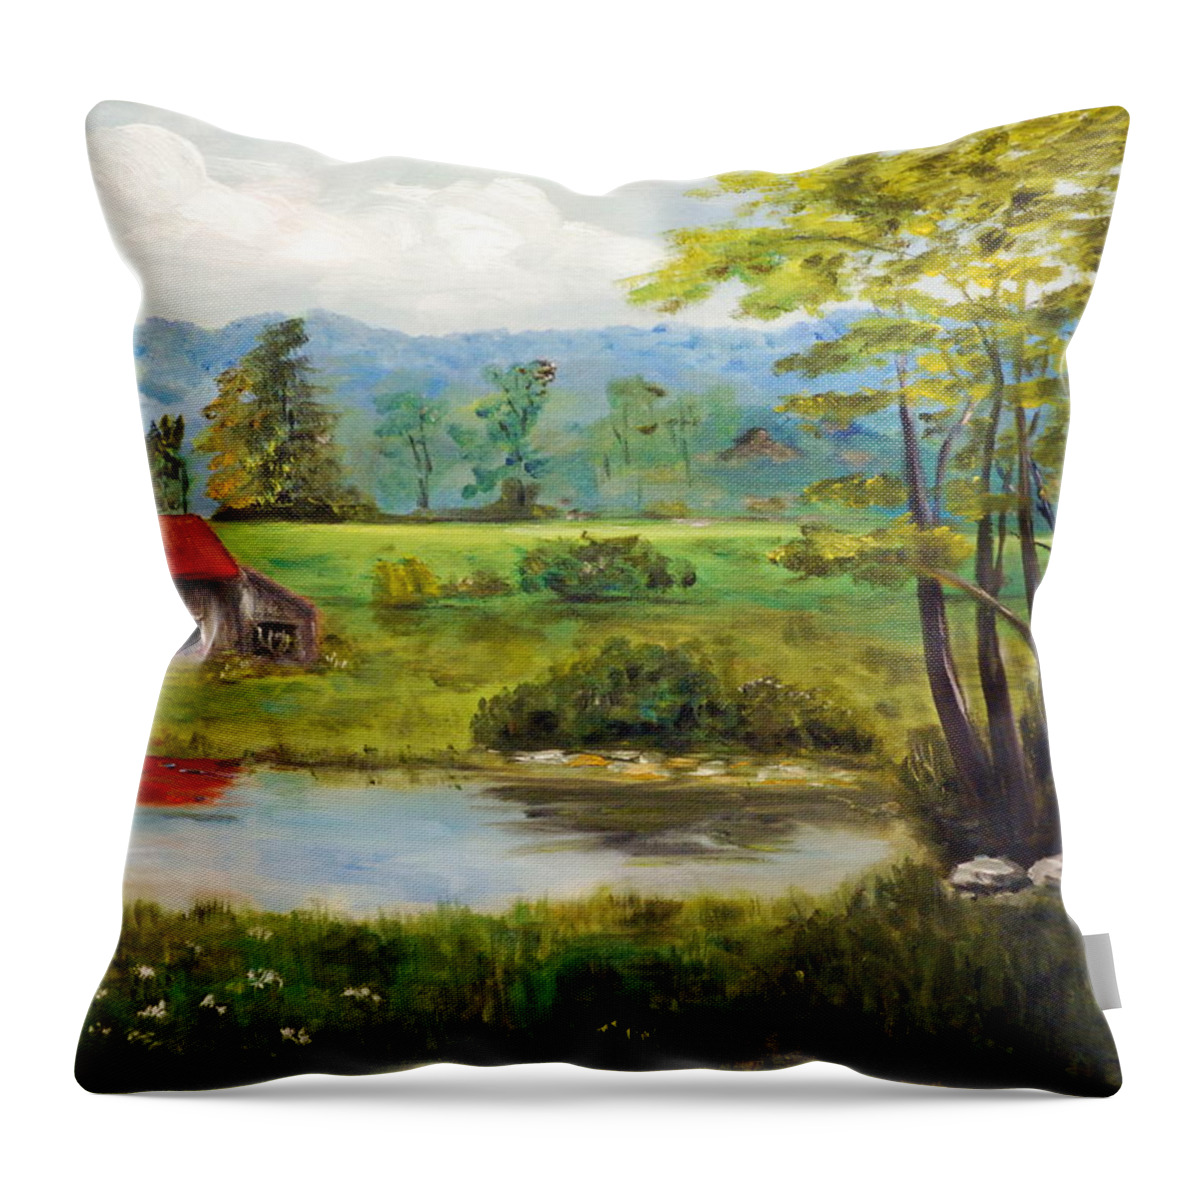 North Carolina Farm Throw Pillow featuring the painting North Carolina Farm by Phil Burton